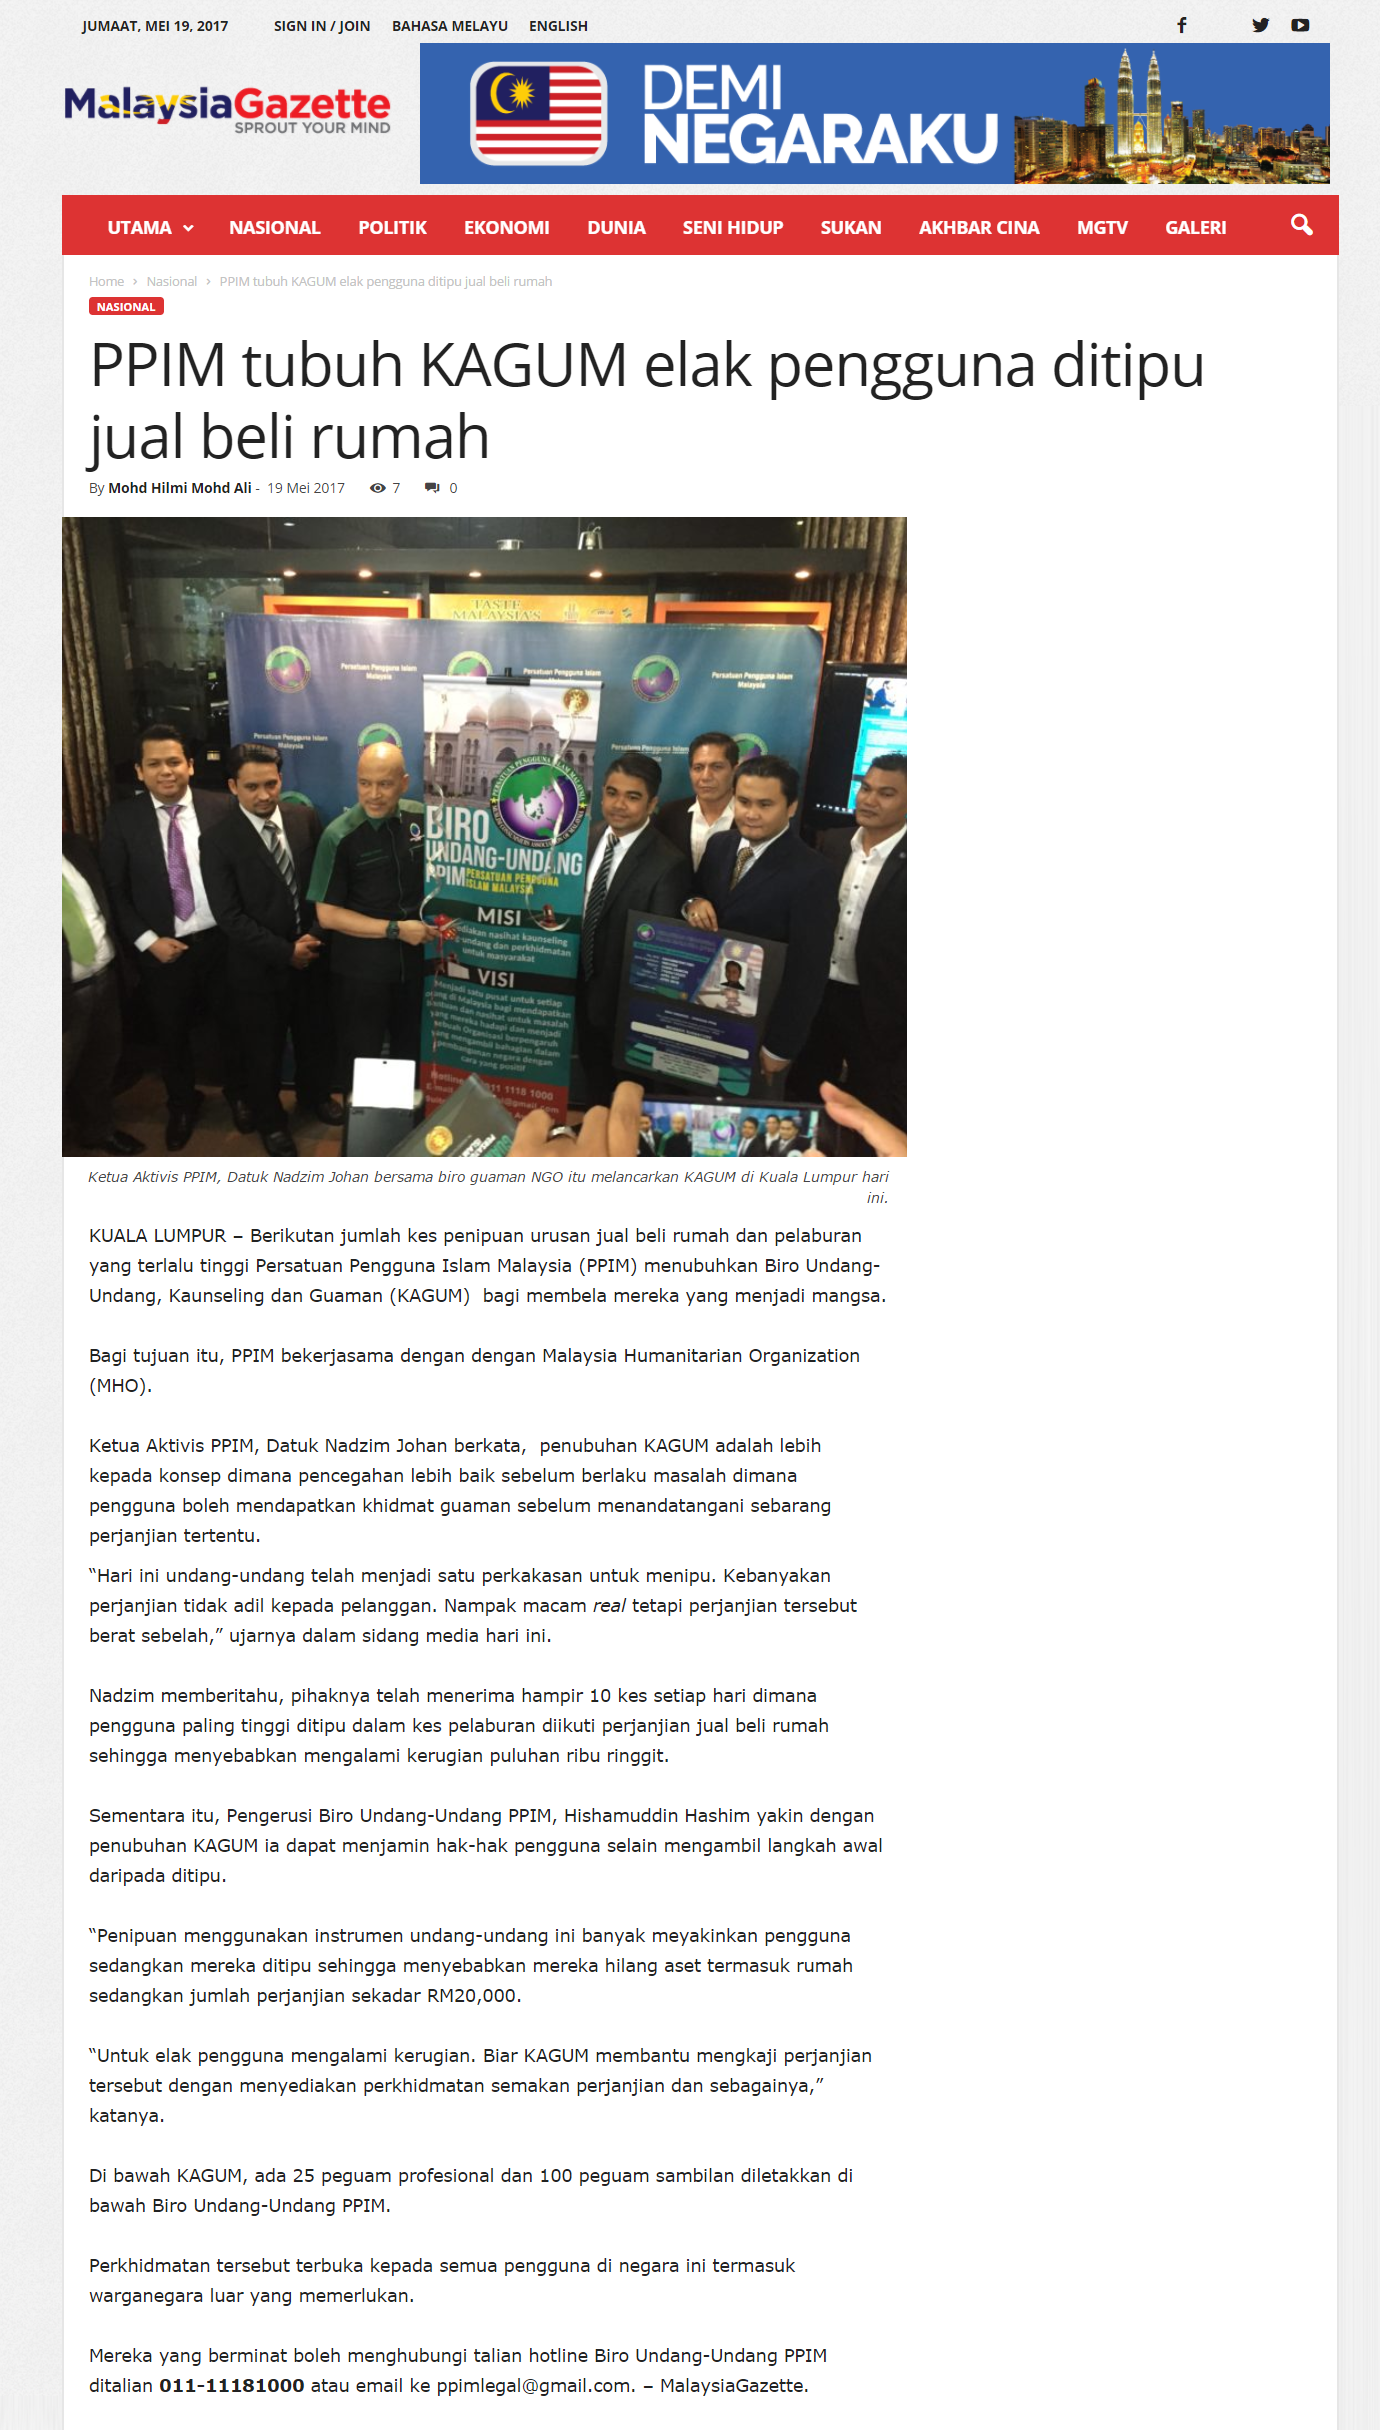 20170519 - MalaysiaGazette - PPIM tubuh KAGUM elak pengguna ditipu jual beli rumah